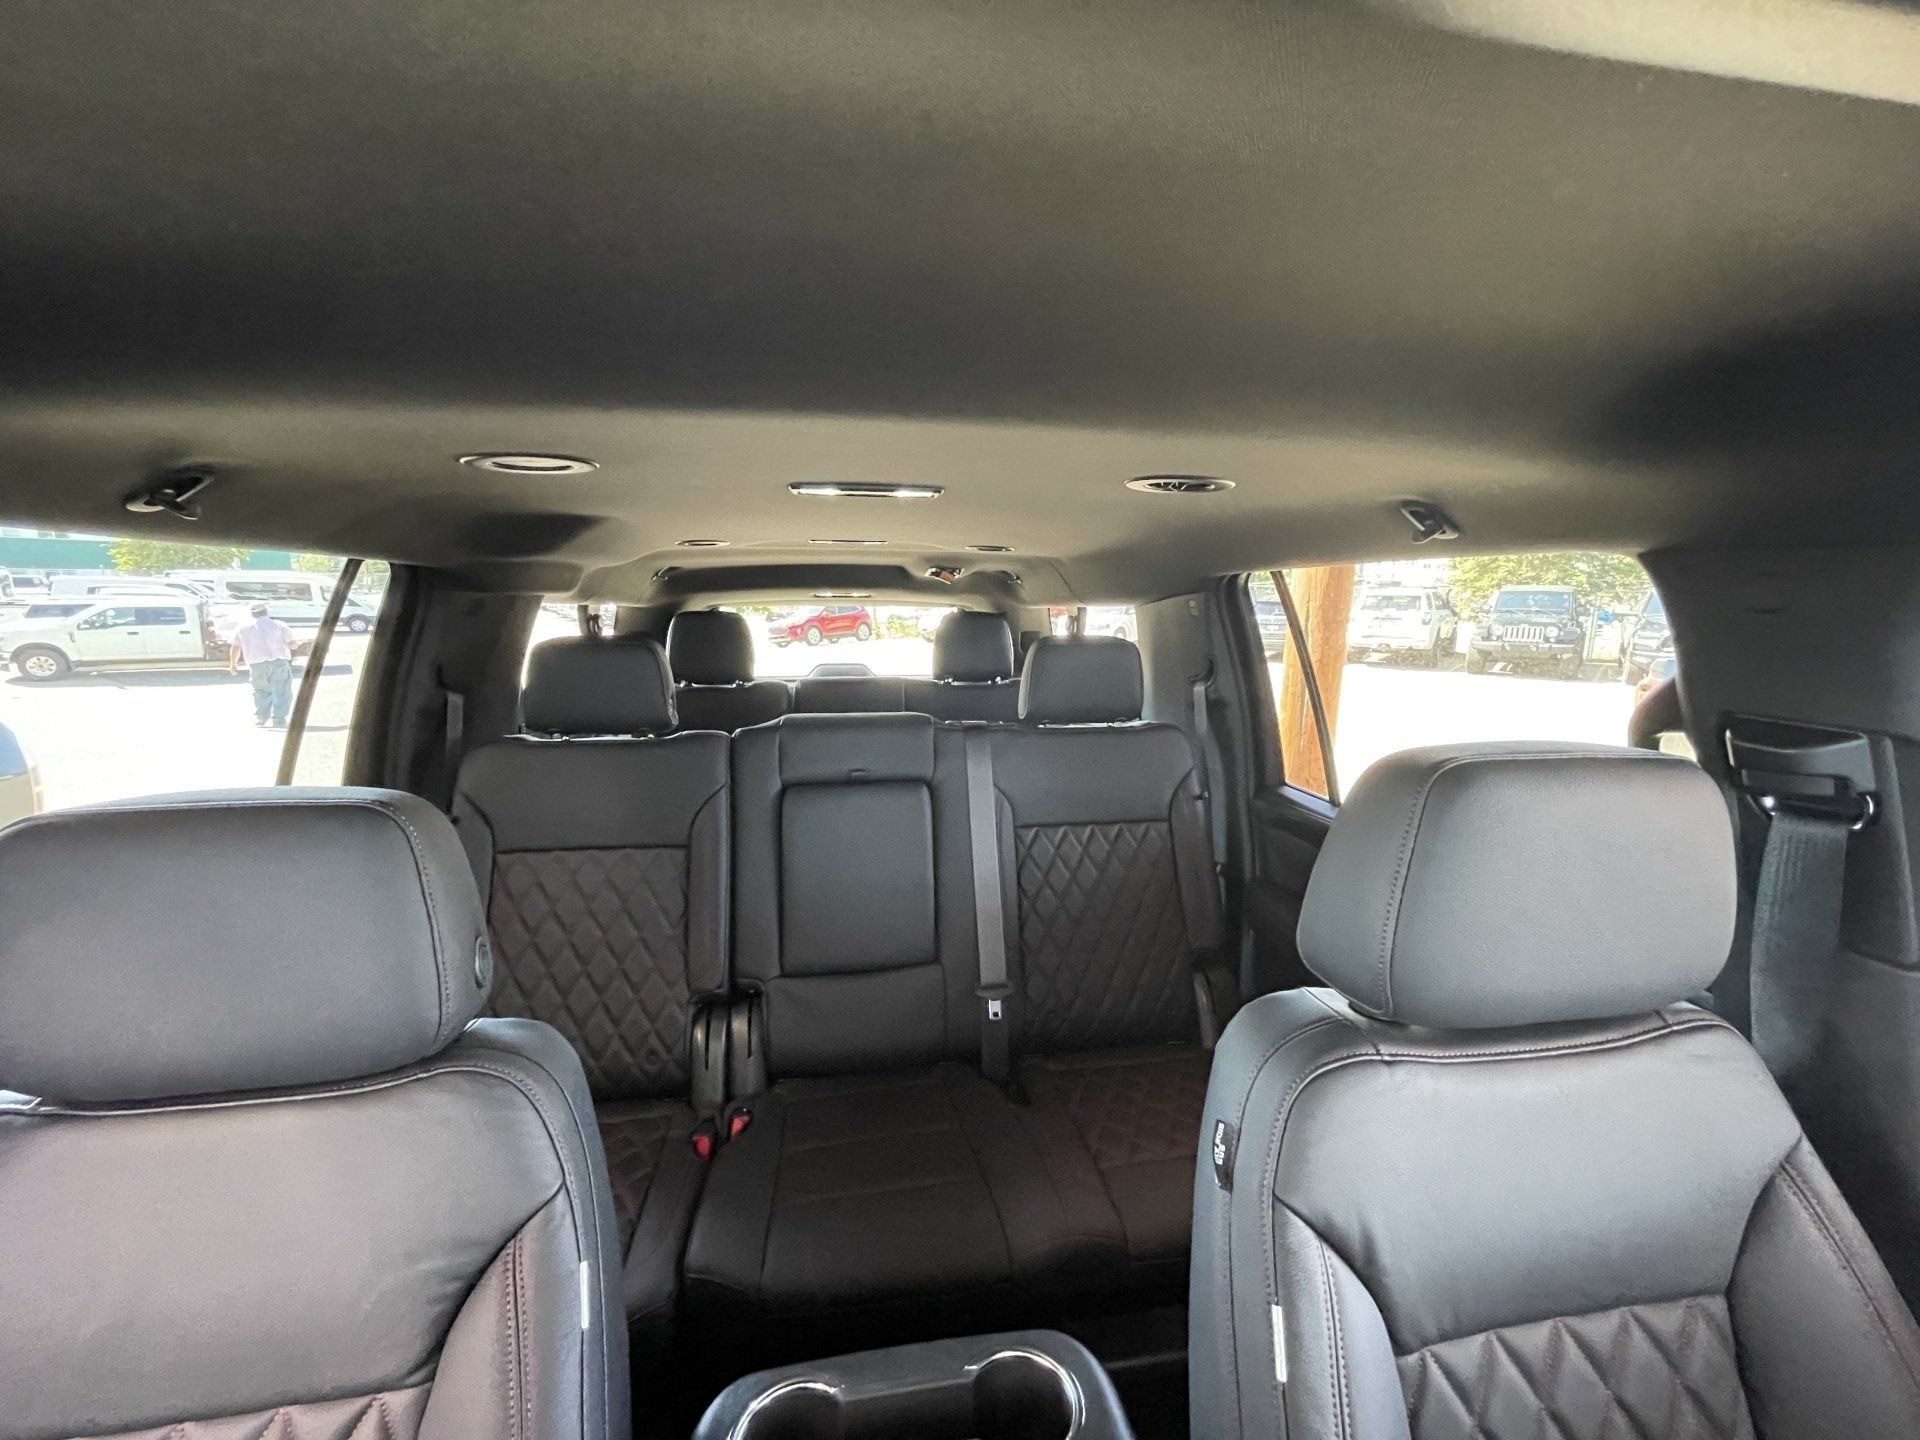 Limo To Go GMC Yukon full size SUV interior seating